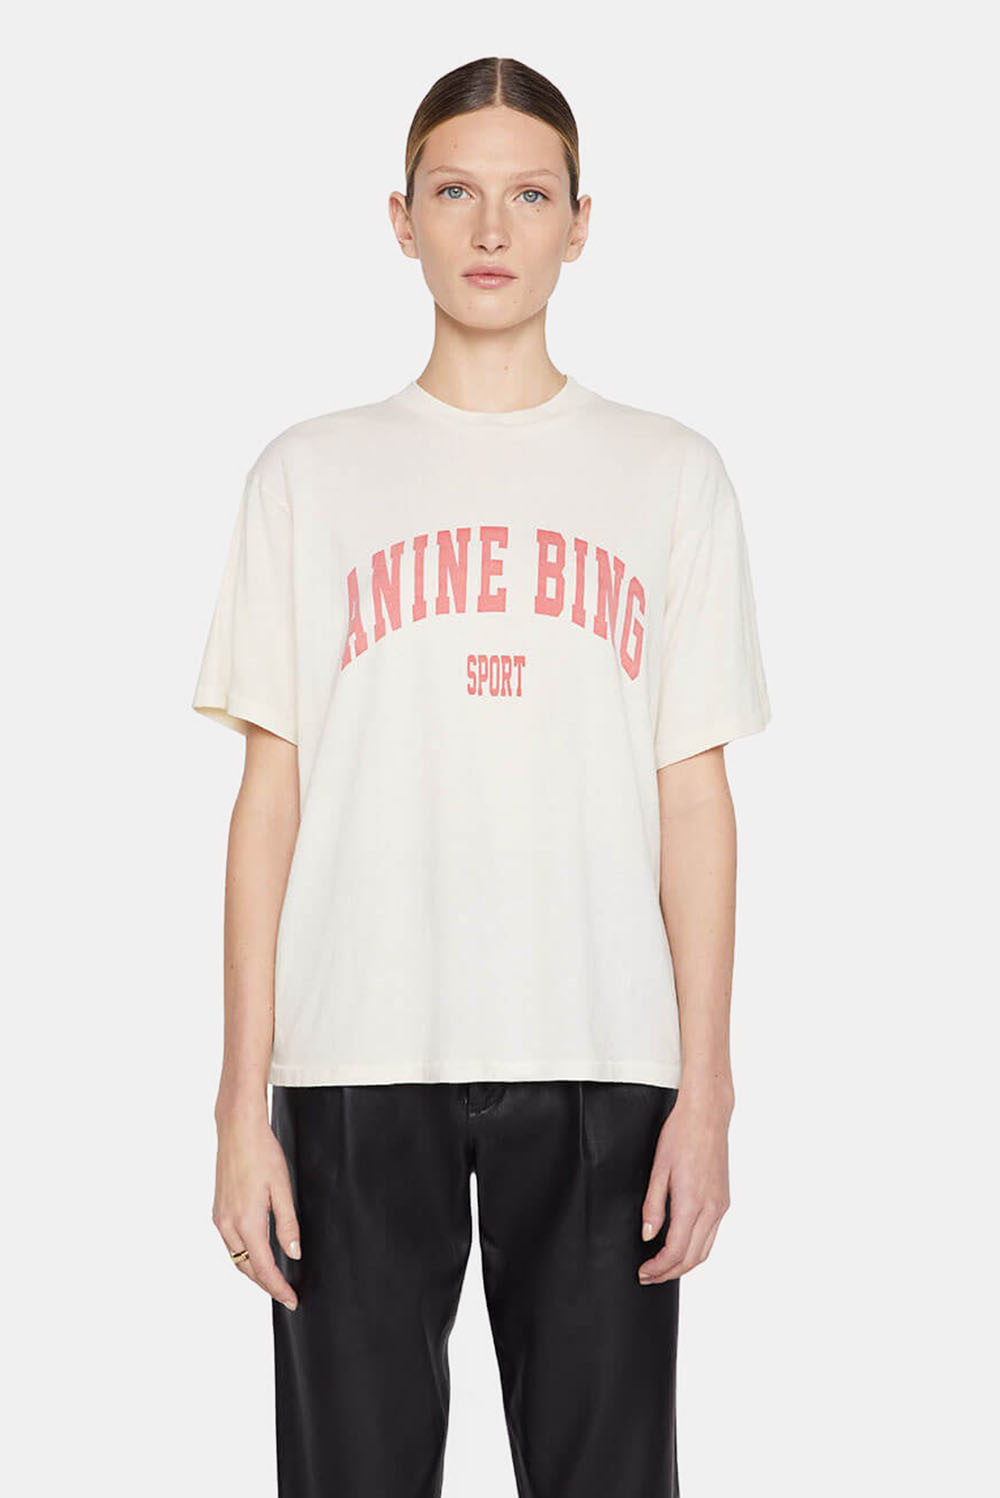 Anine Bing t shirt William S 08 2226 120 creme